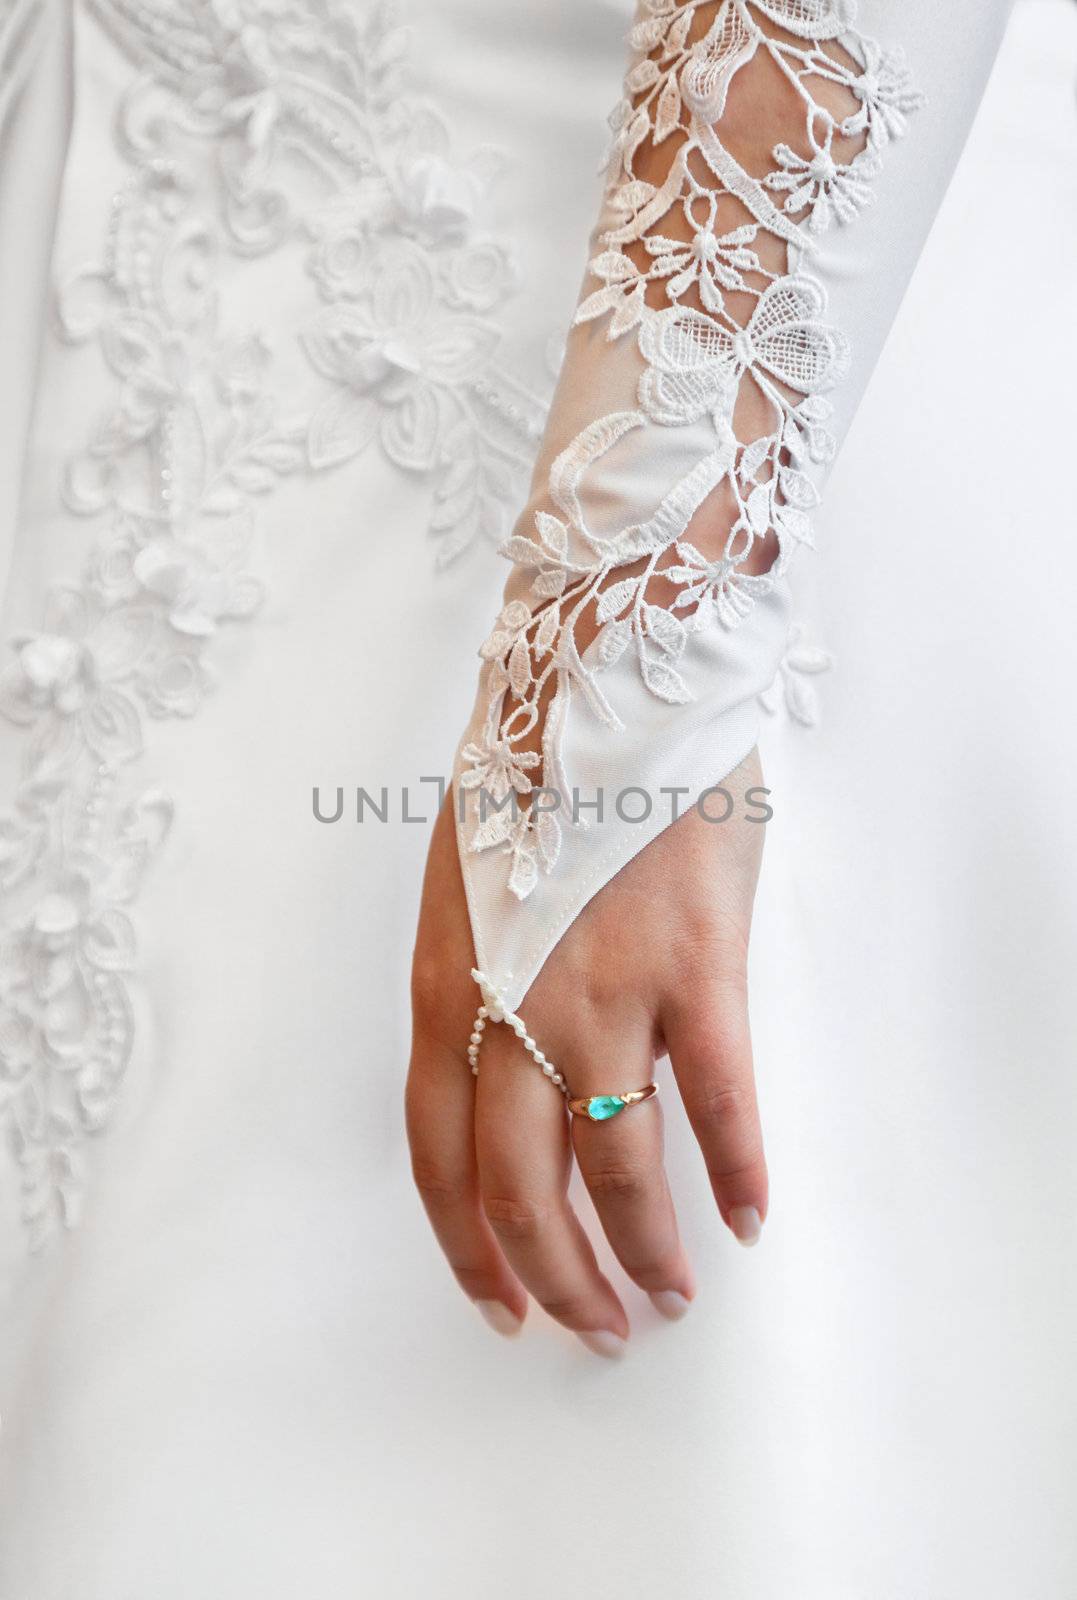 Female hand - wedding glove by pzaxe